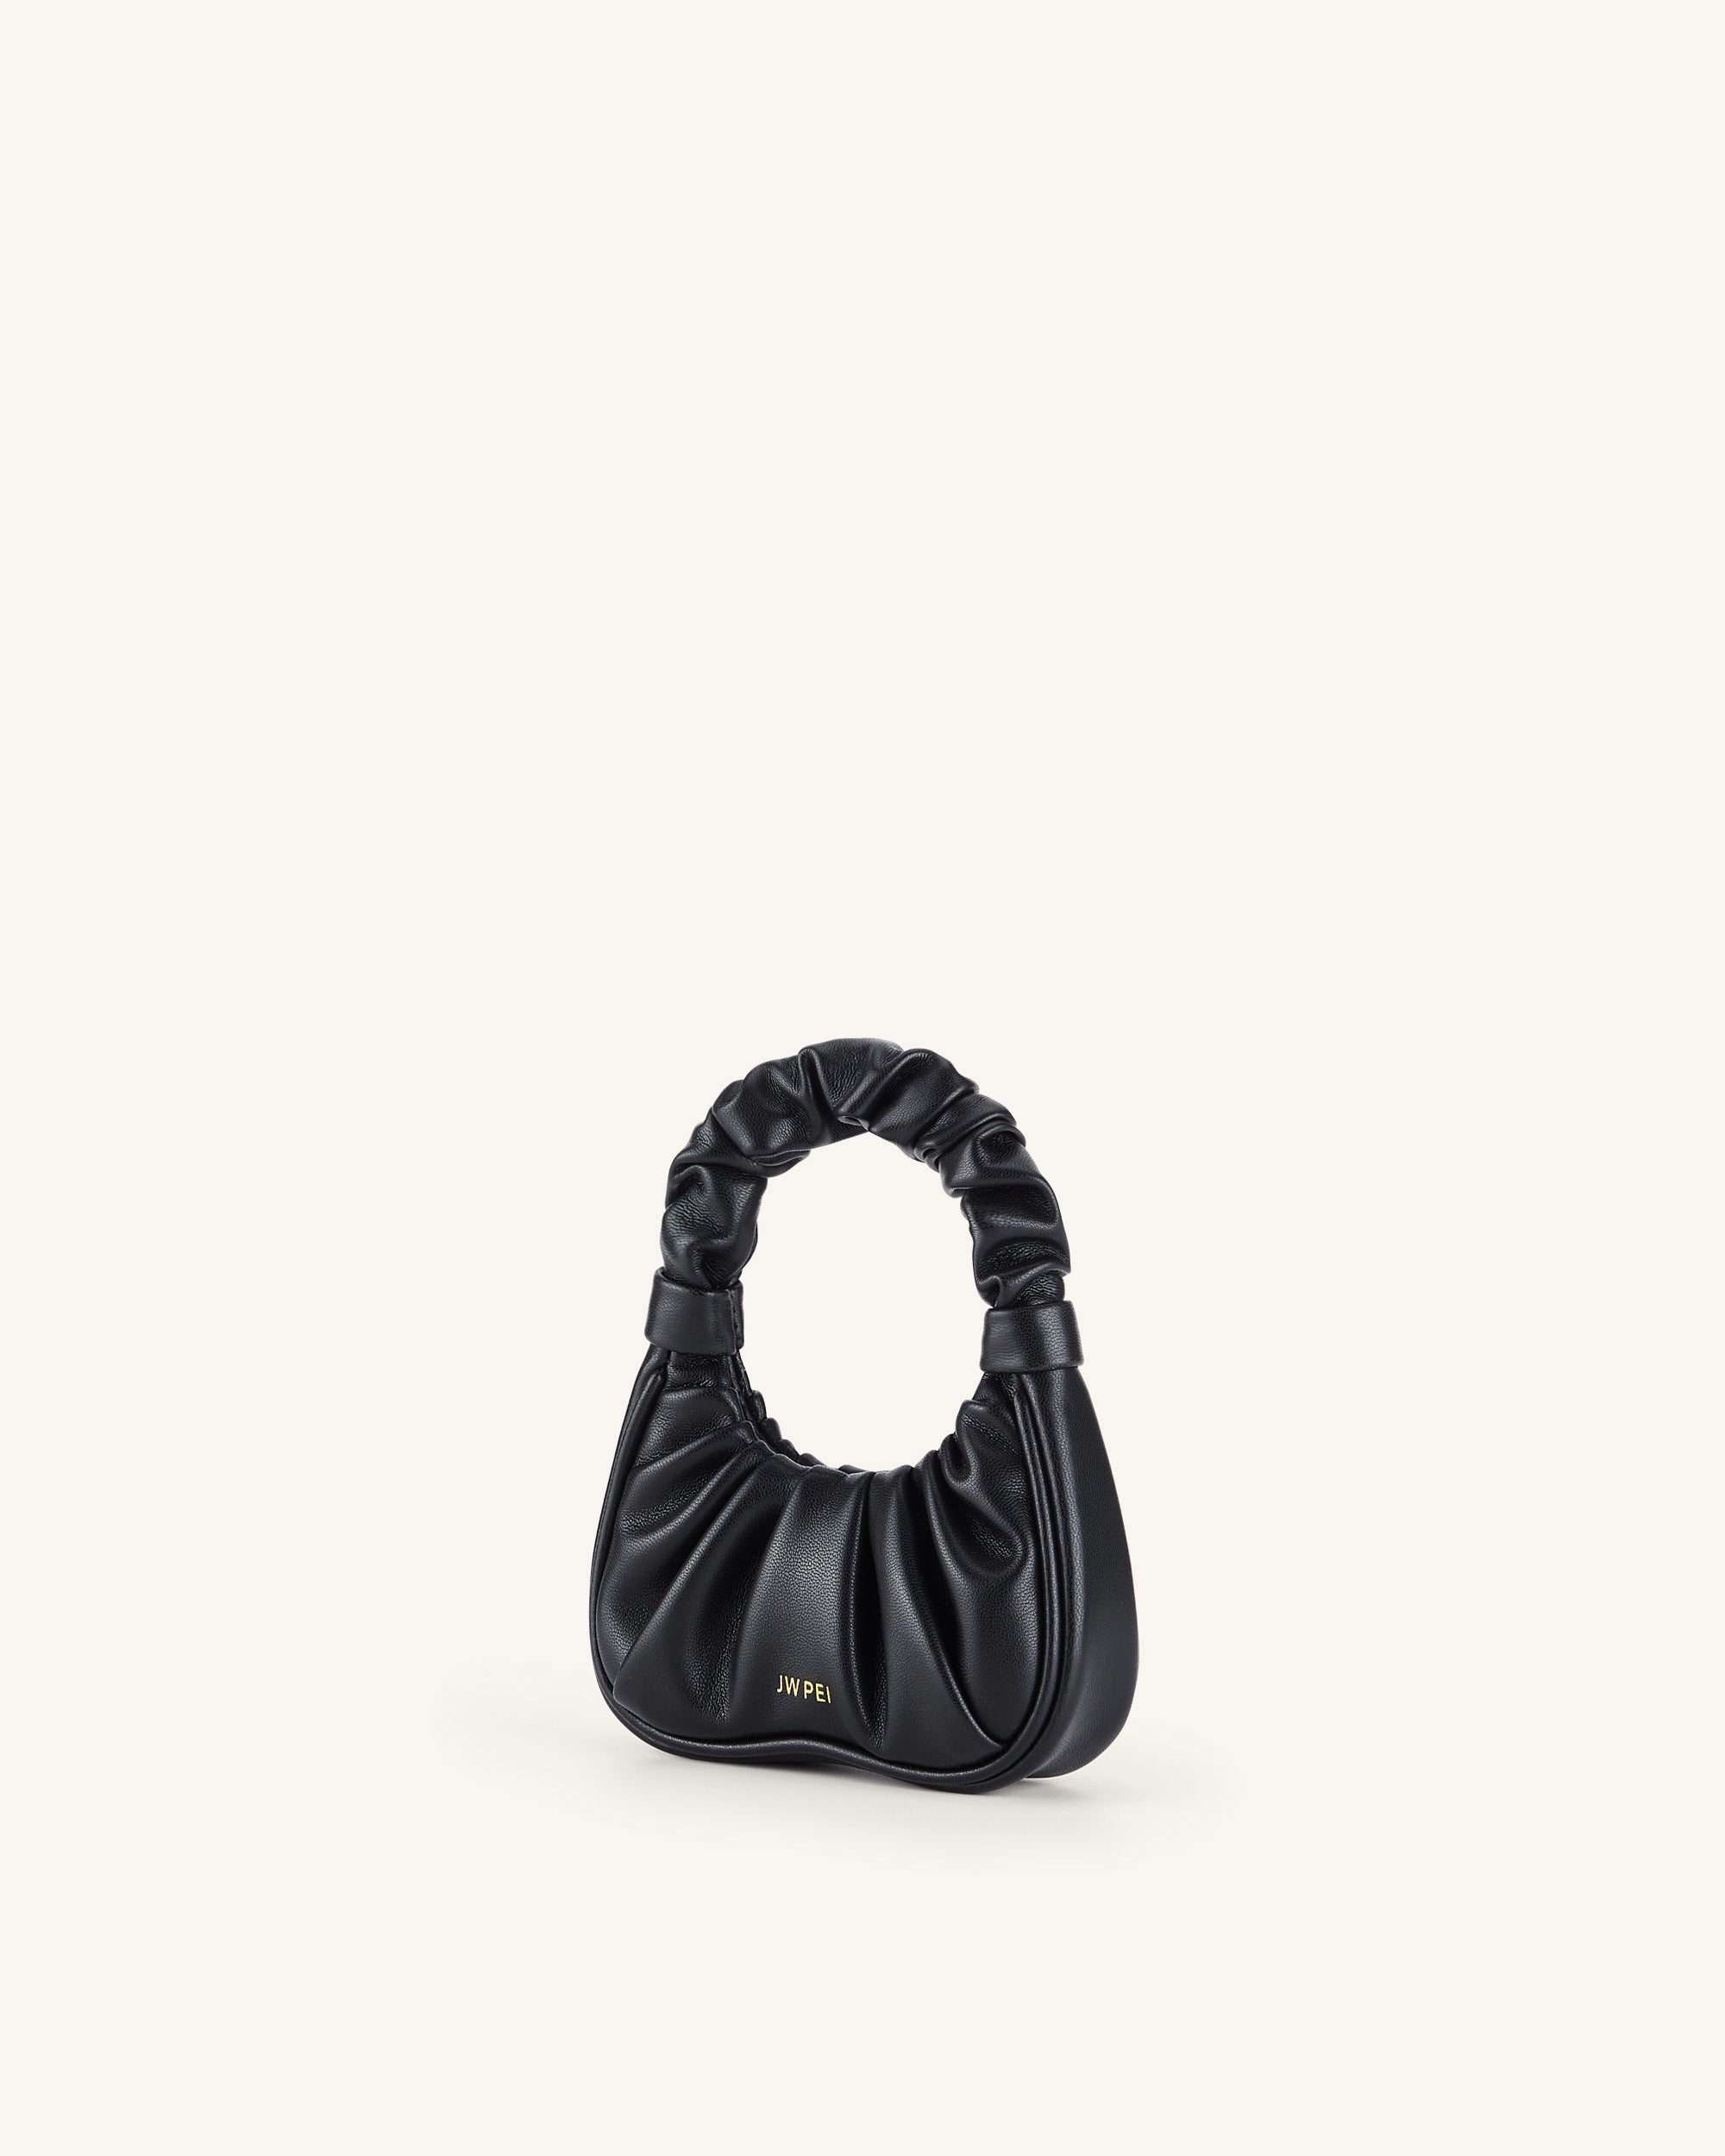 Gabbi Super Mini Bag - Black - JW PEI